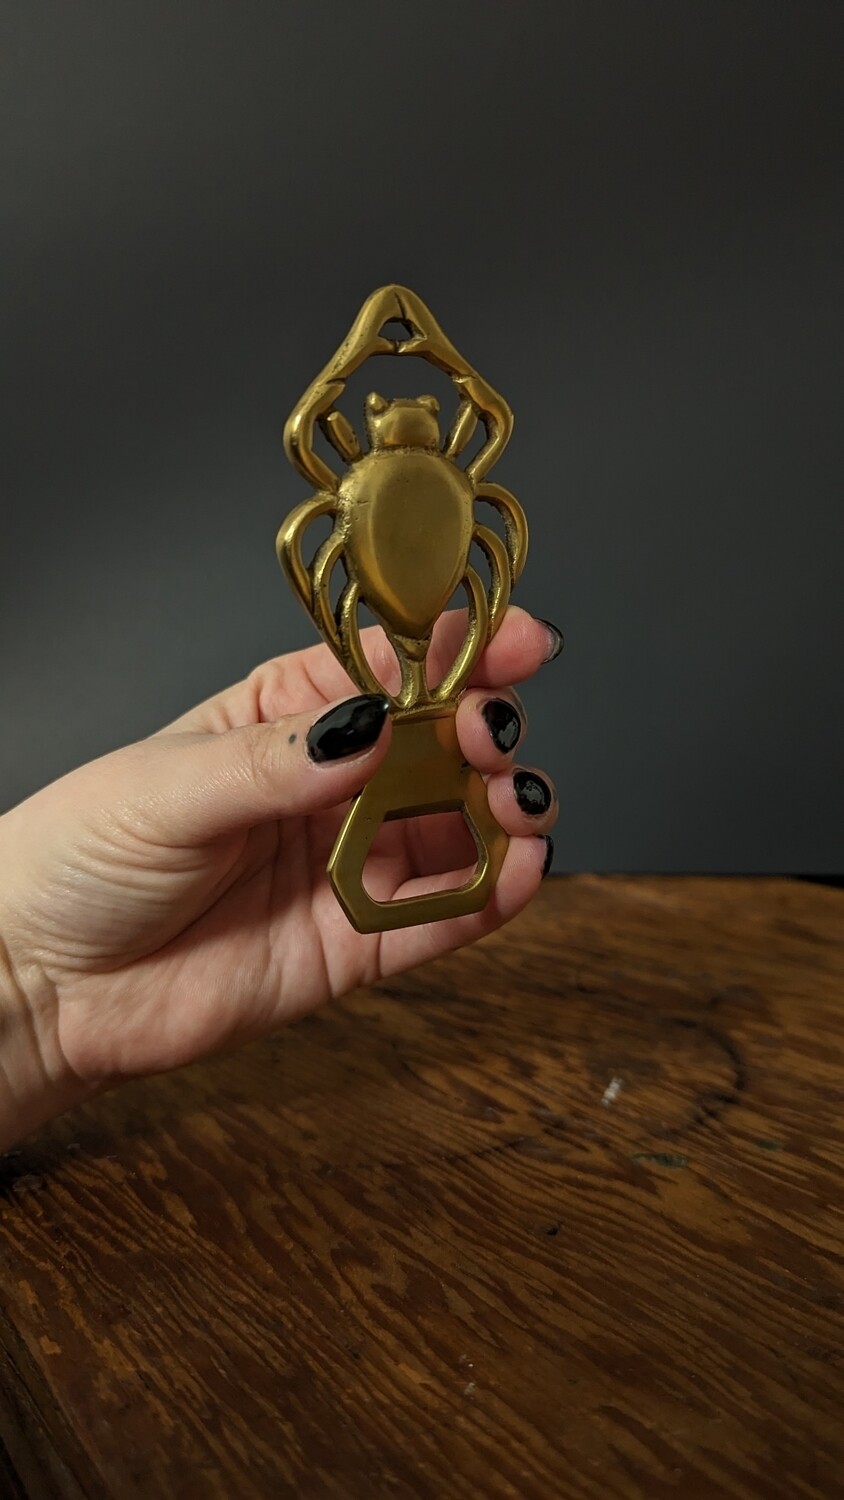 Spider brass bottle opener